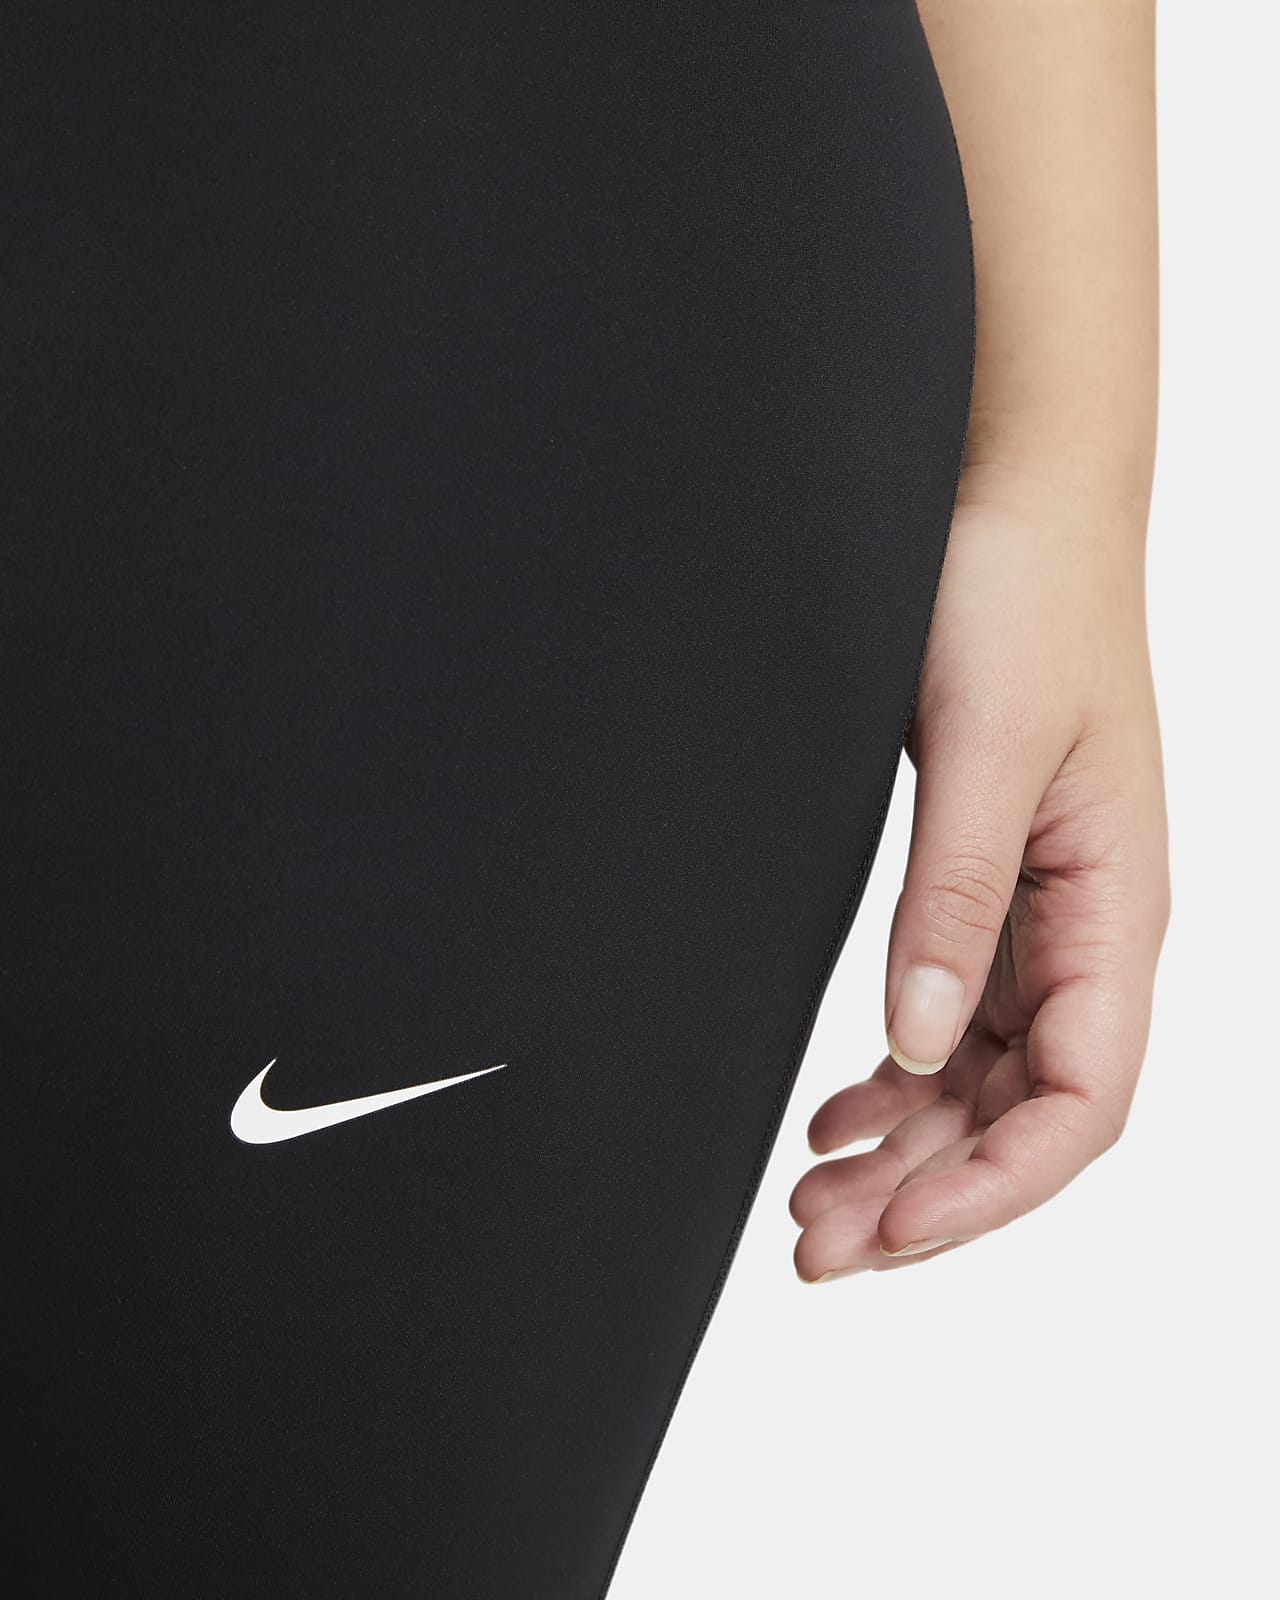 Nike Women's Pronto Essential Cropped Ladies Running Tights Size Medium